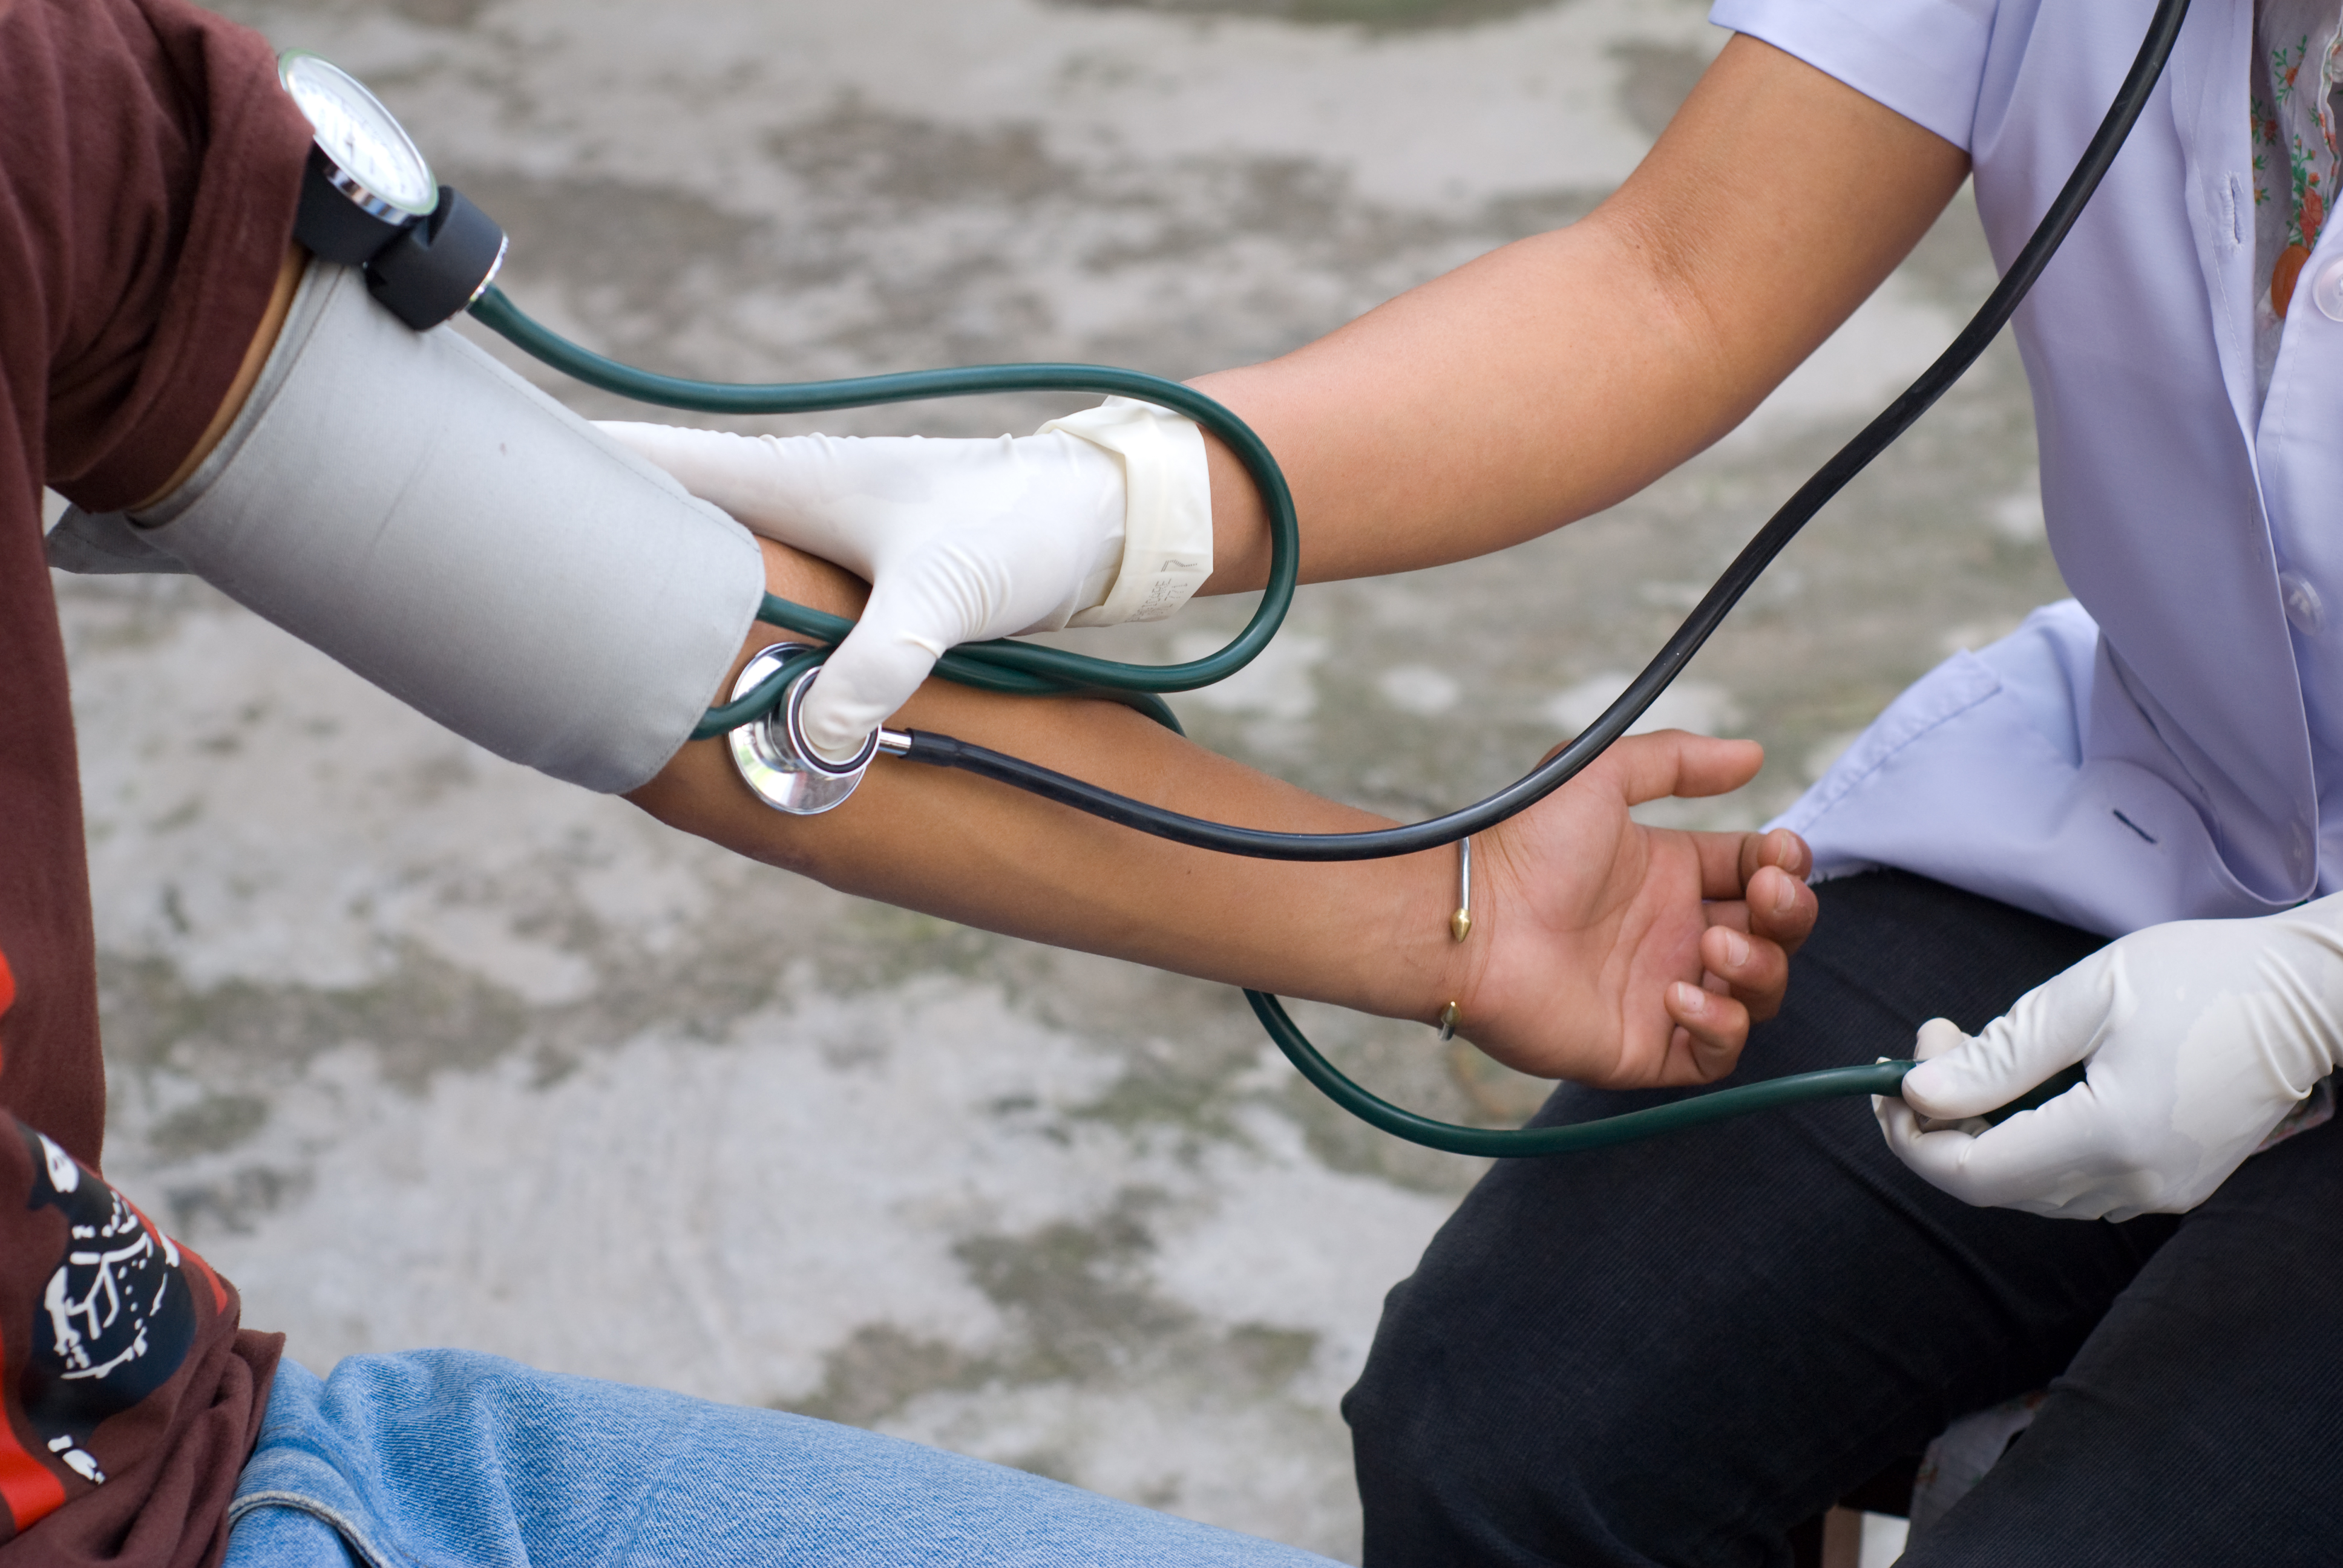 Tracking blood pressure at home - Harvard Health